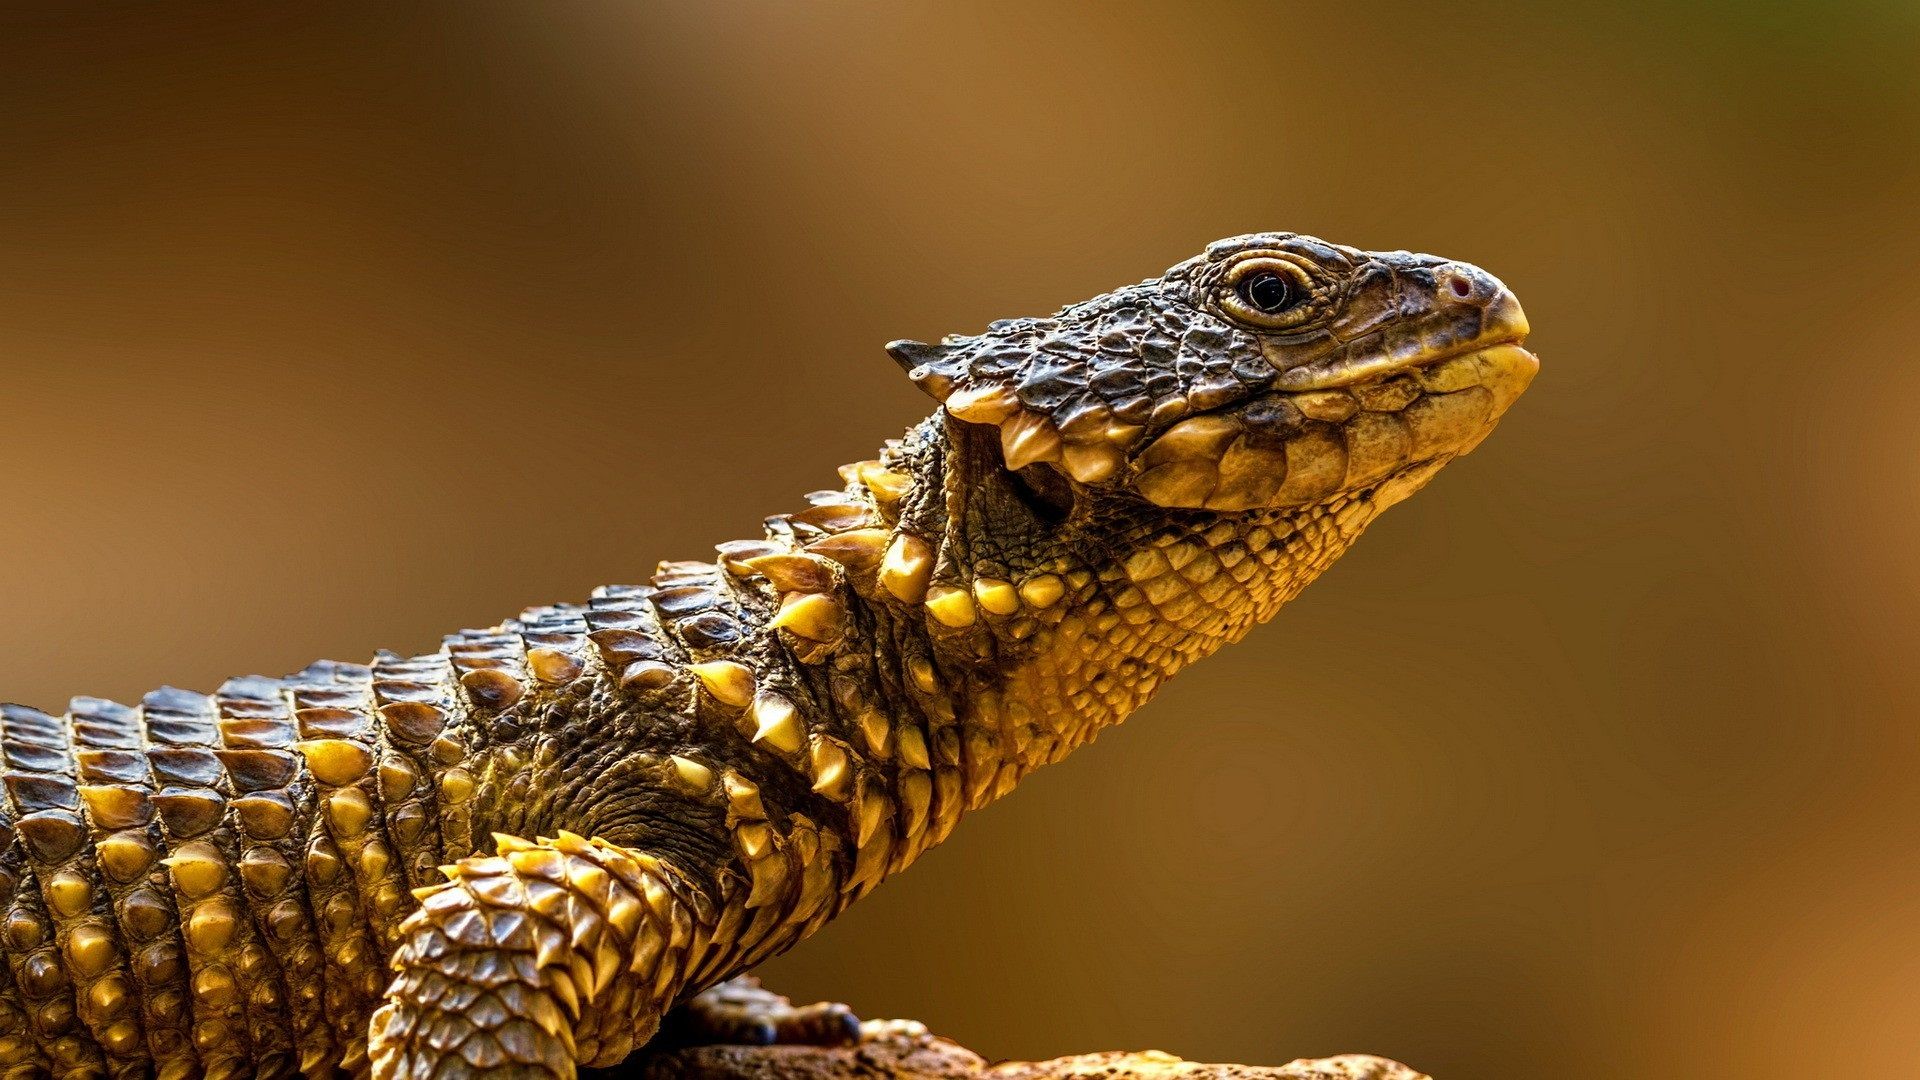 Reptiles de fondo de pantalla, vista lateral de lagarto 1920x1080 Full HD 2K Picture, Image